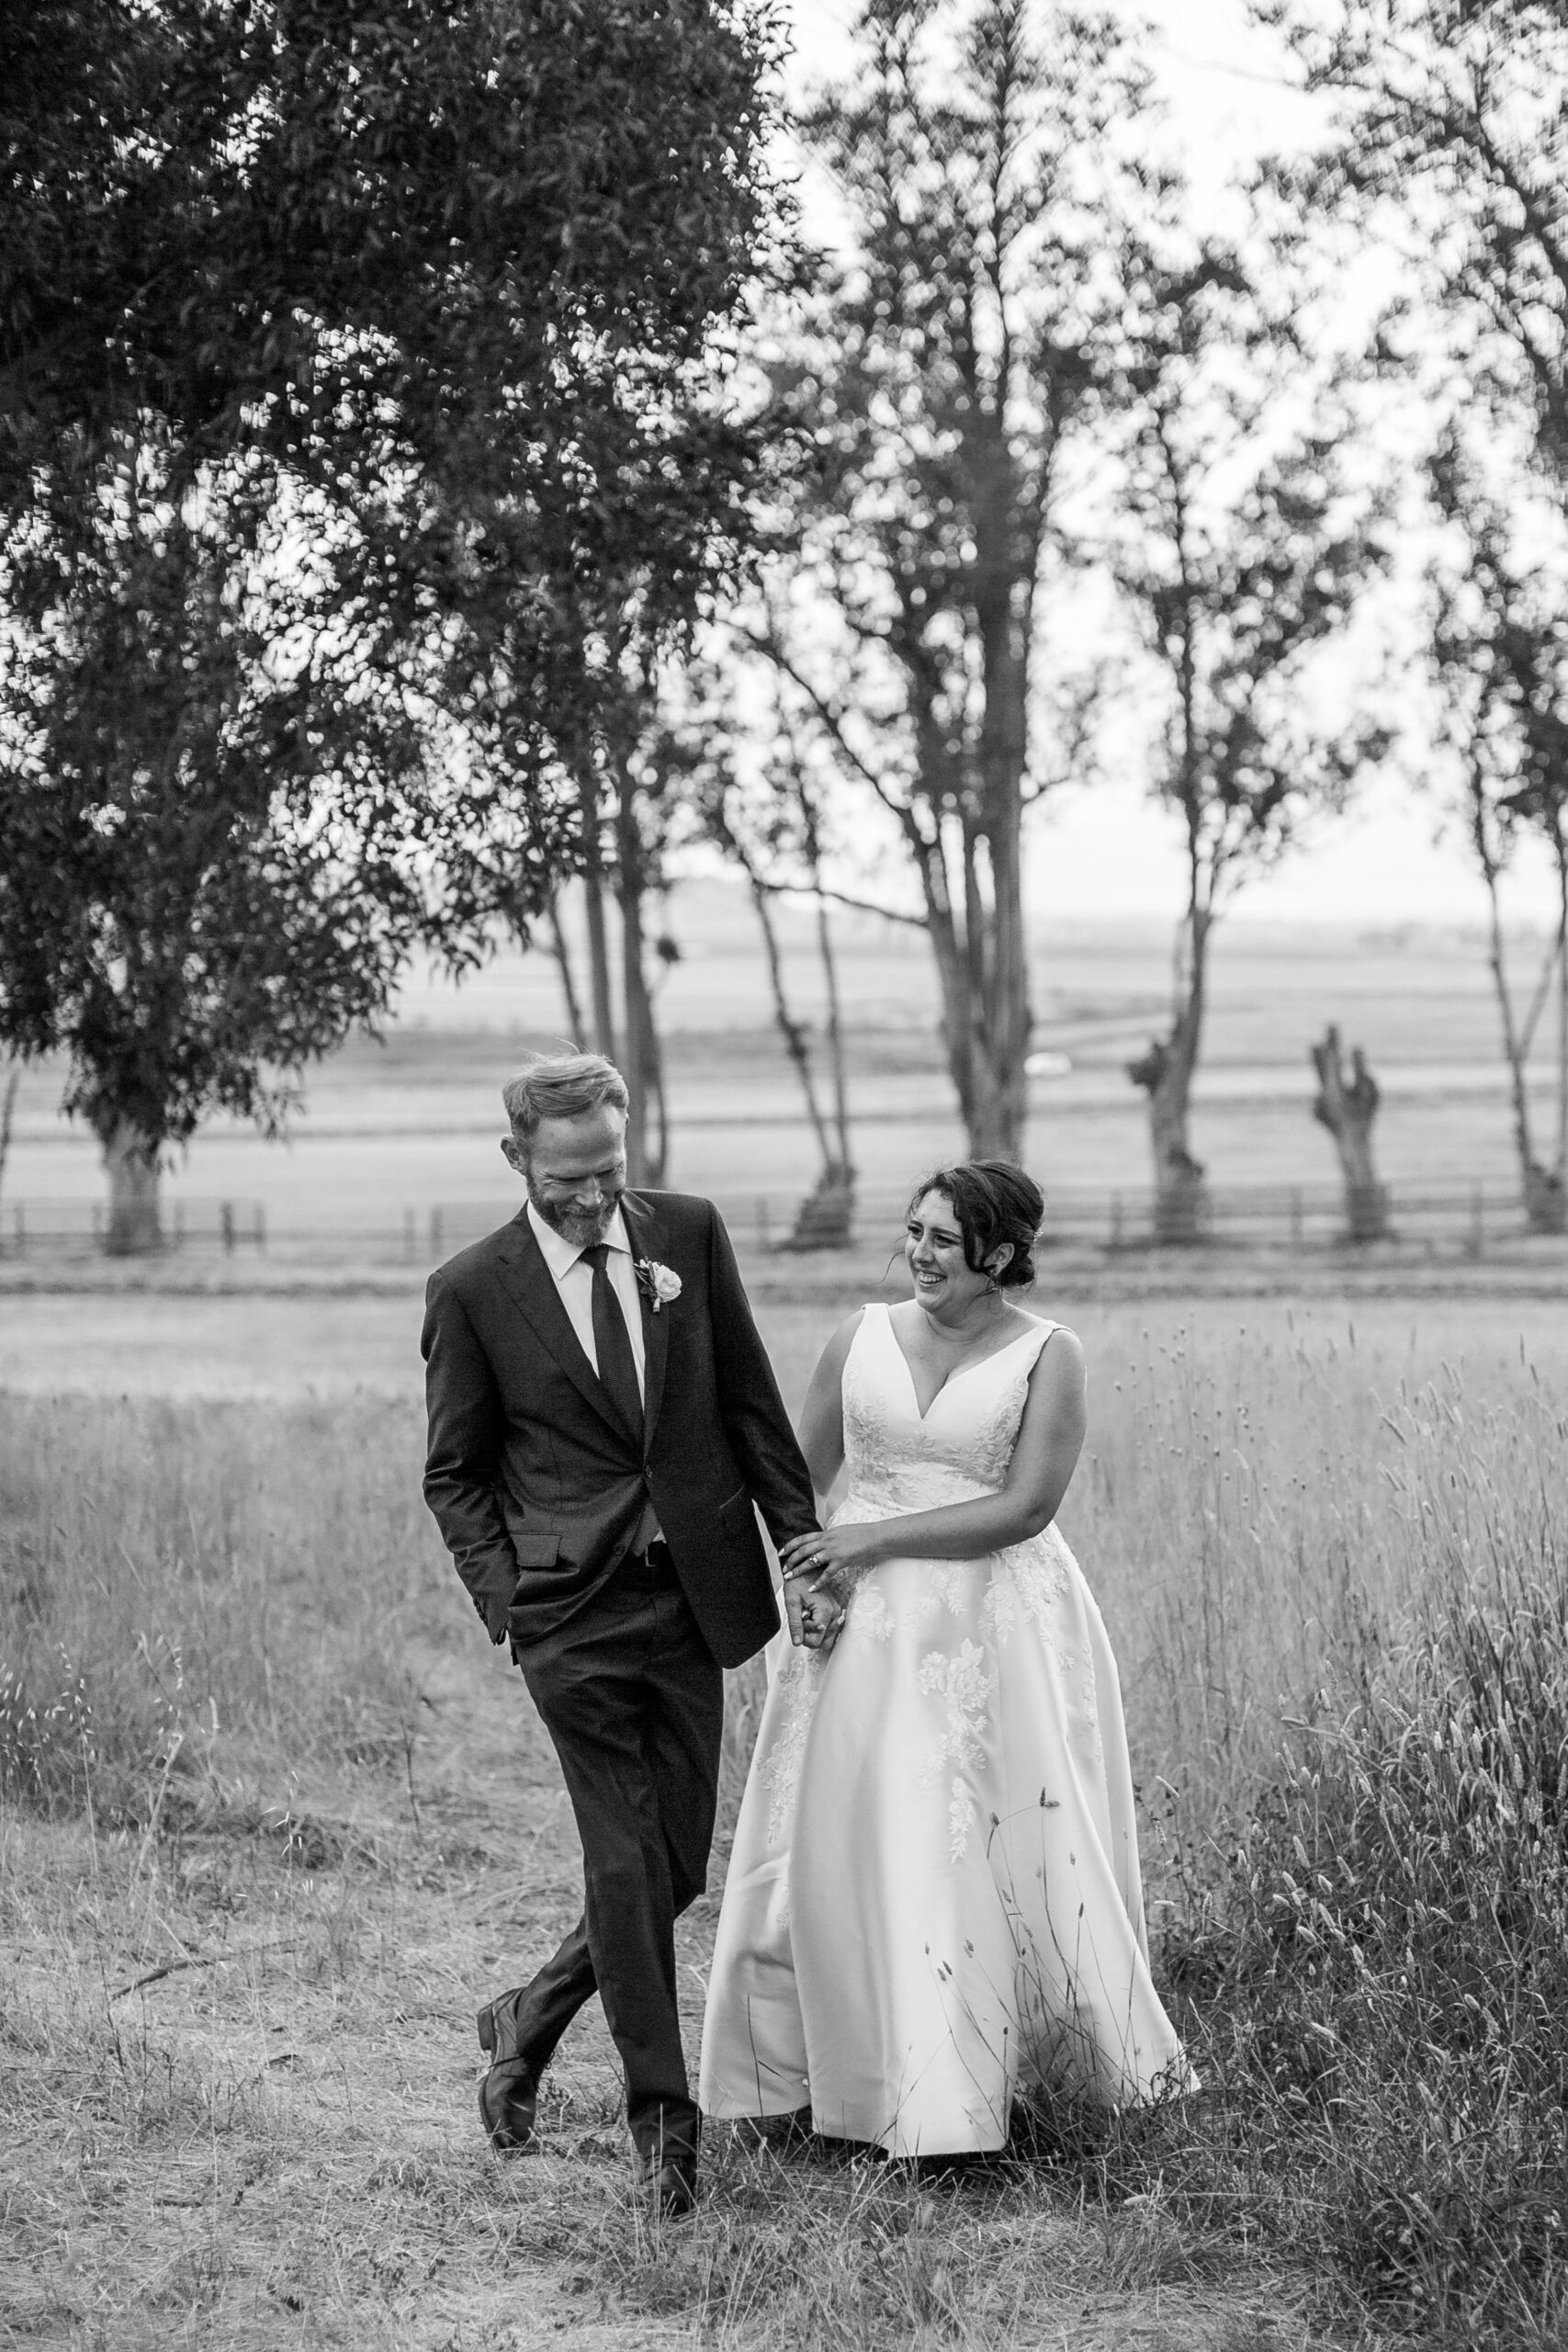 rebecca skidgel photography petaluma wedding photographer private estate bride groom walking laughing